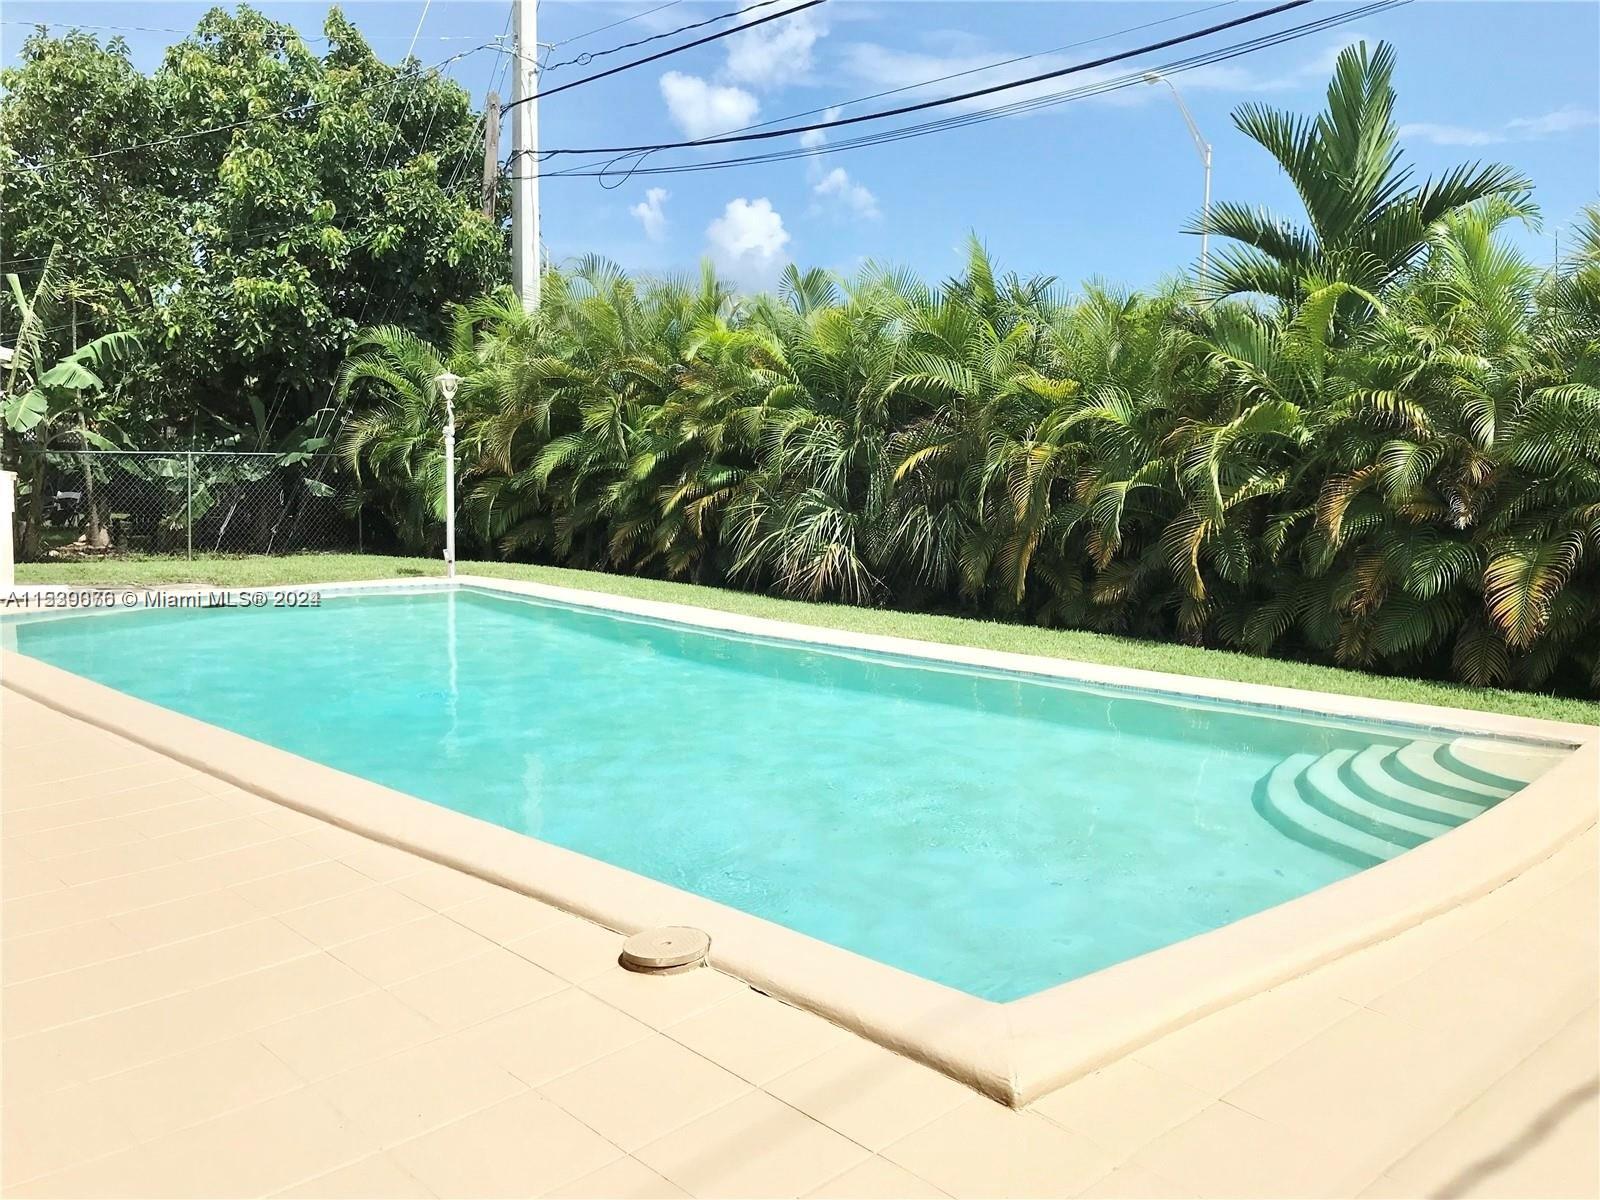 Property for Sale at 2060 Ne 185th Ter, North Miami Beach, Miami-Dade County, Florida - Bedrooms: 4 
Bathrooms: 3  - $1,108,000